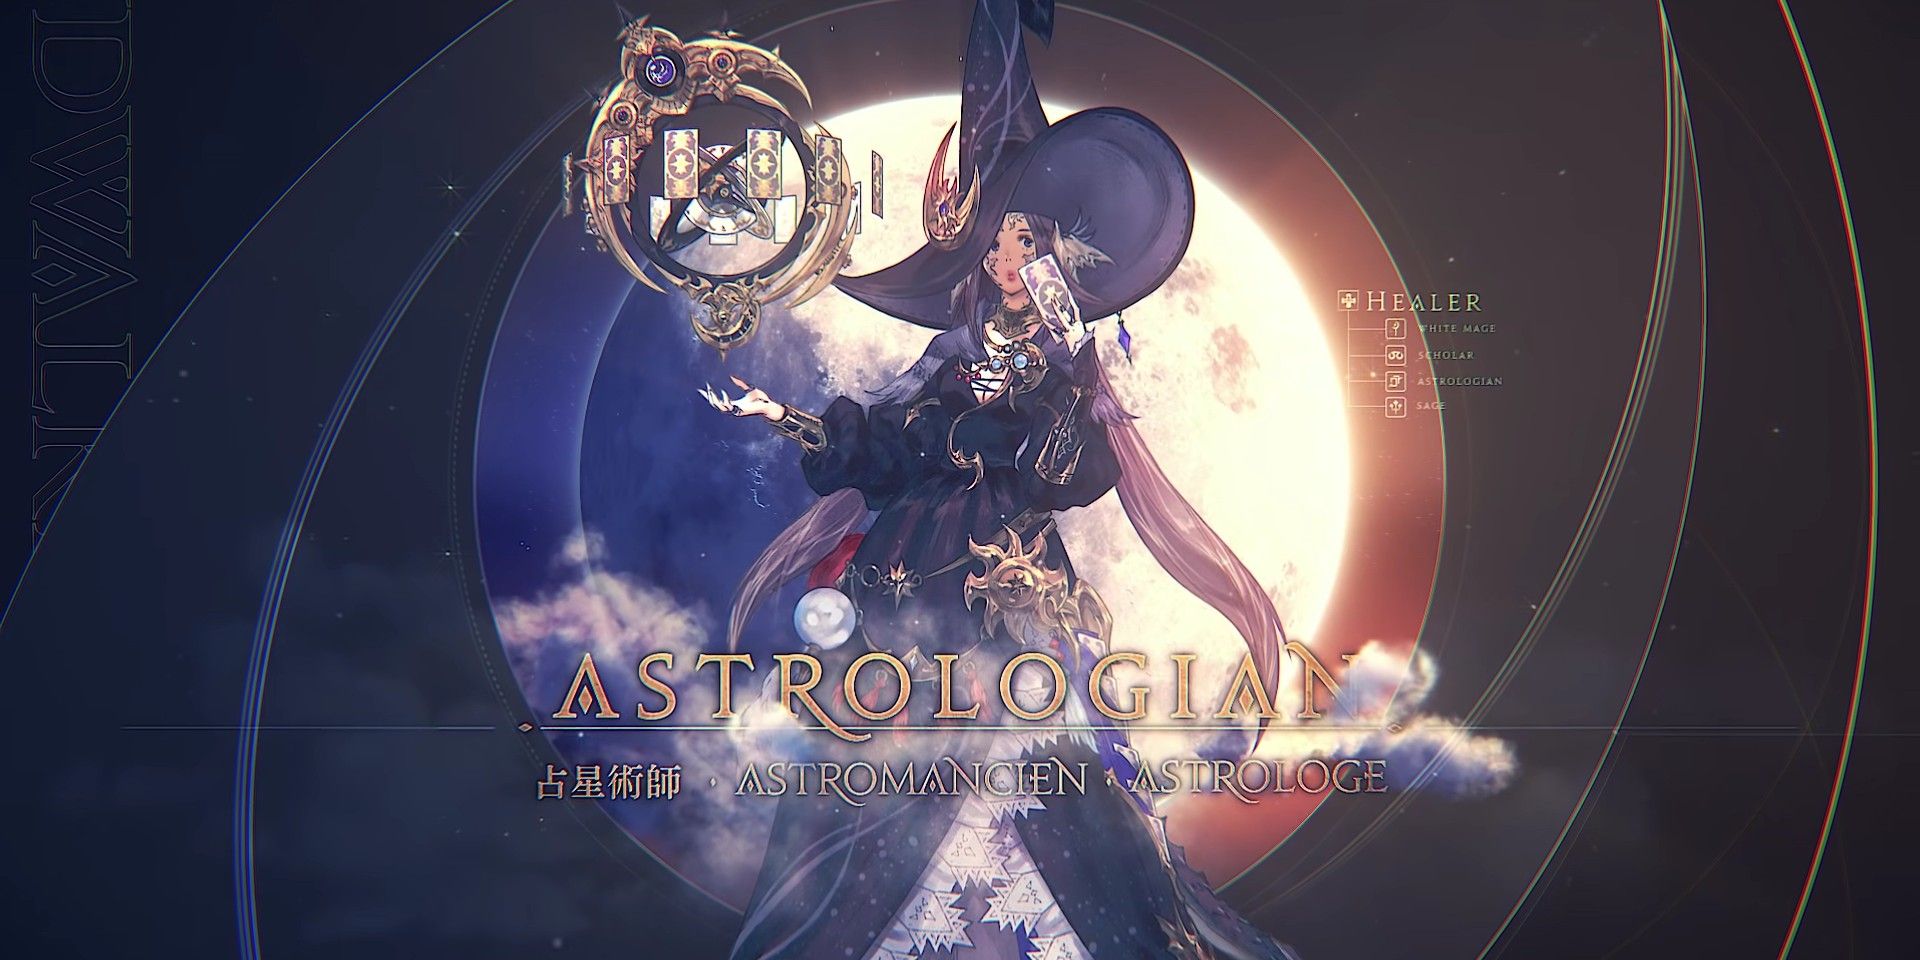 Final Fantasy XIV Endwalker Astrologian In Job Changes Video